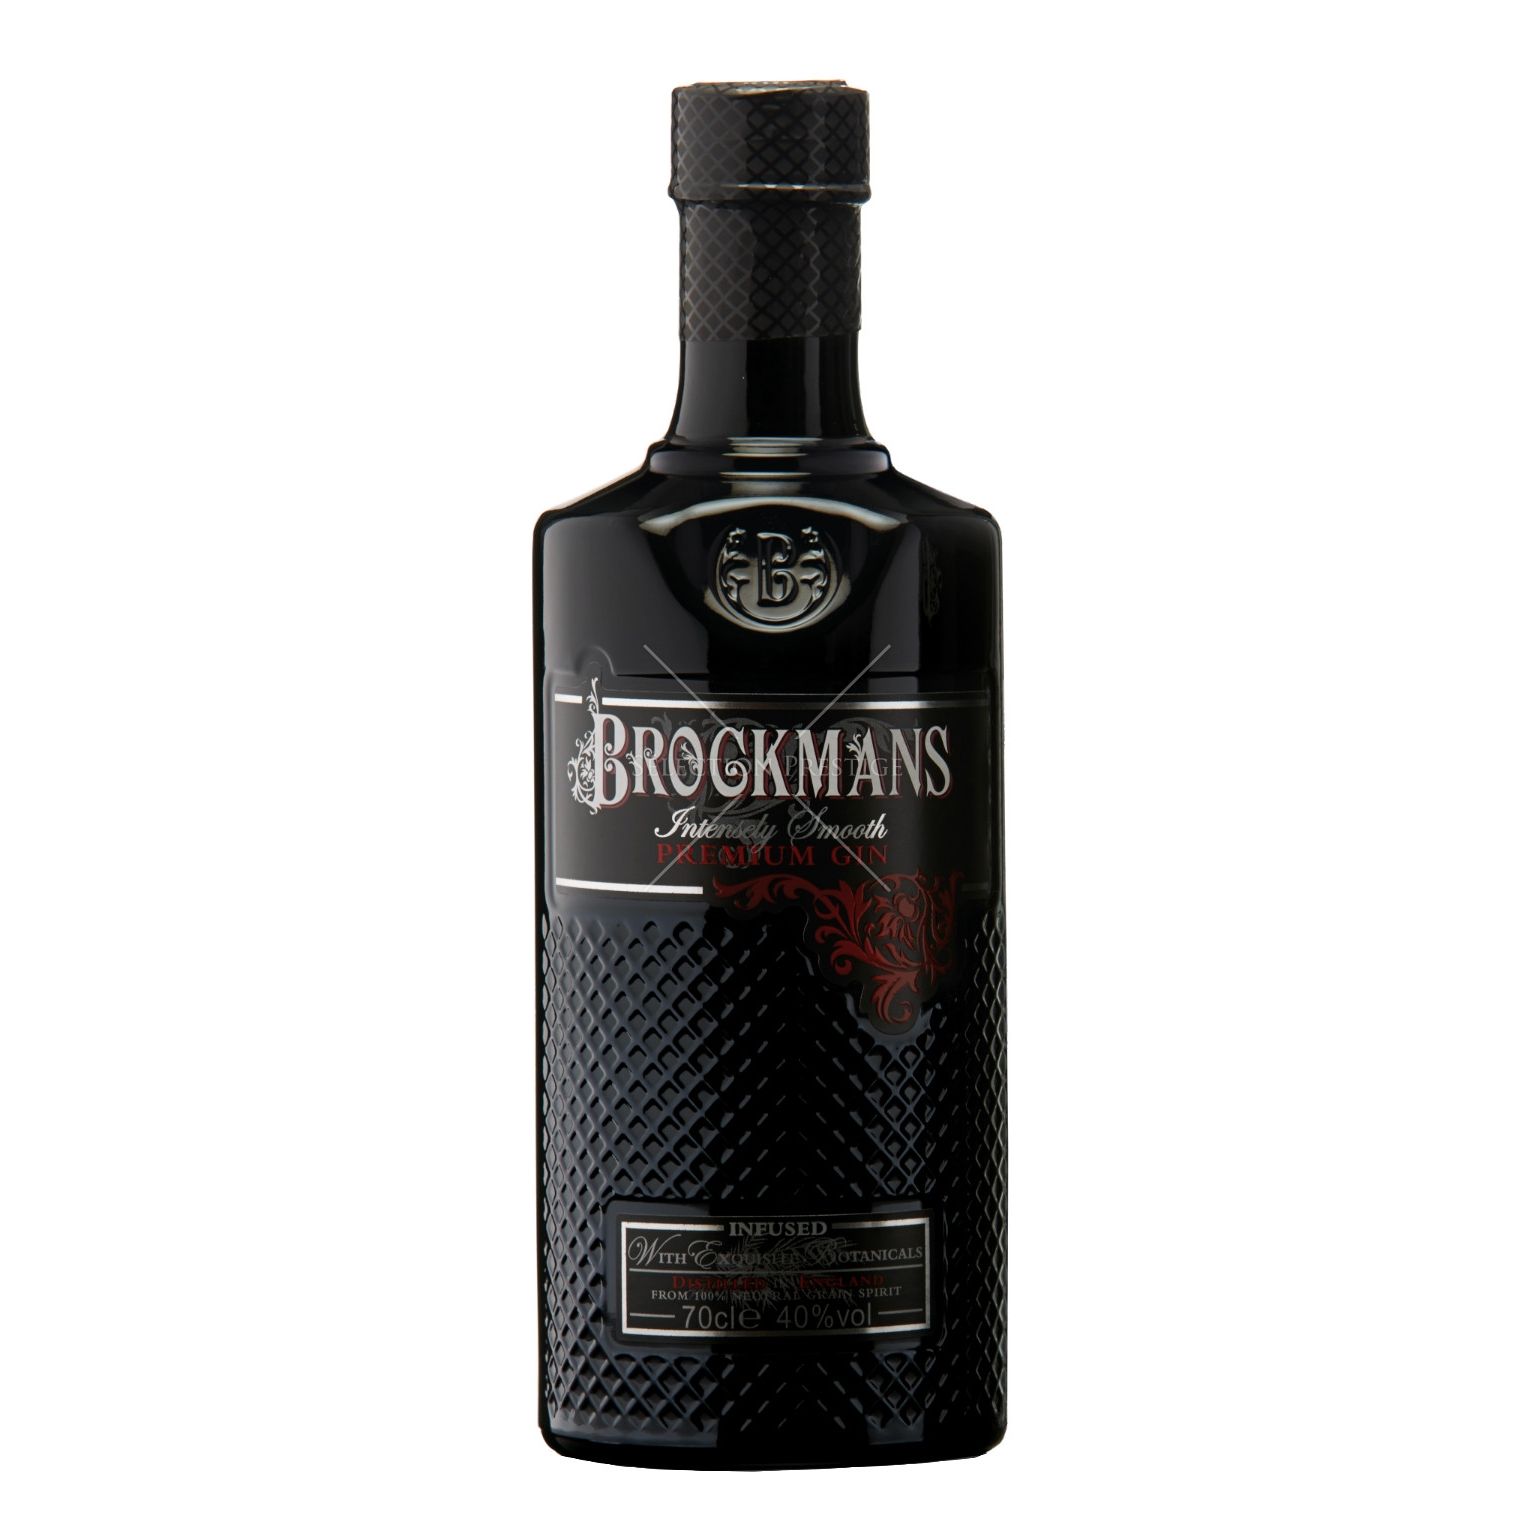 Brockmans Intensely Smooth Premium Gin 0.7L (40% Vol.)